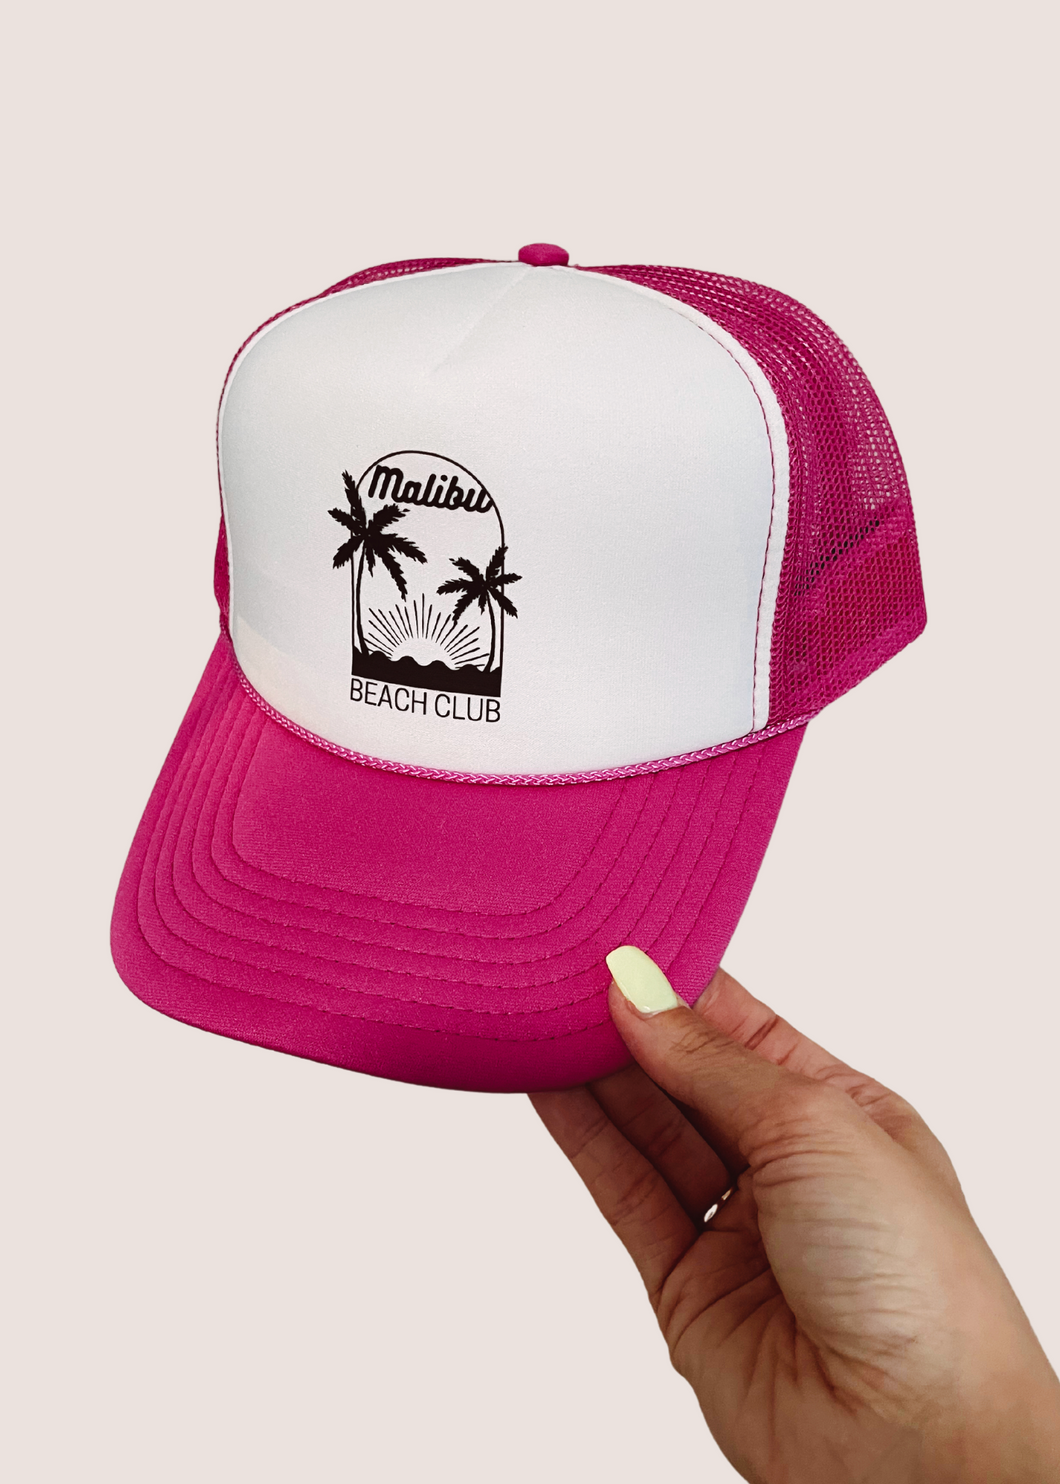 Beach Club Trucker Hat